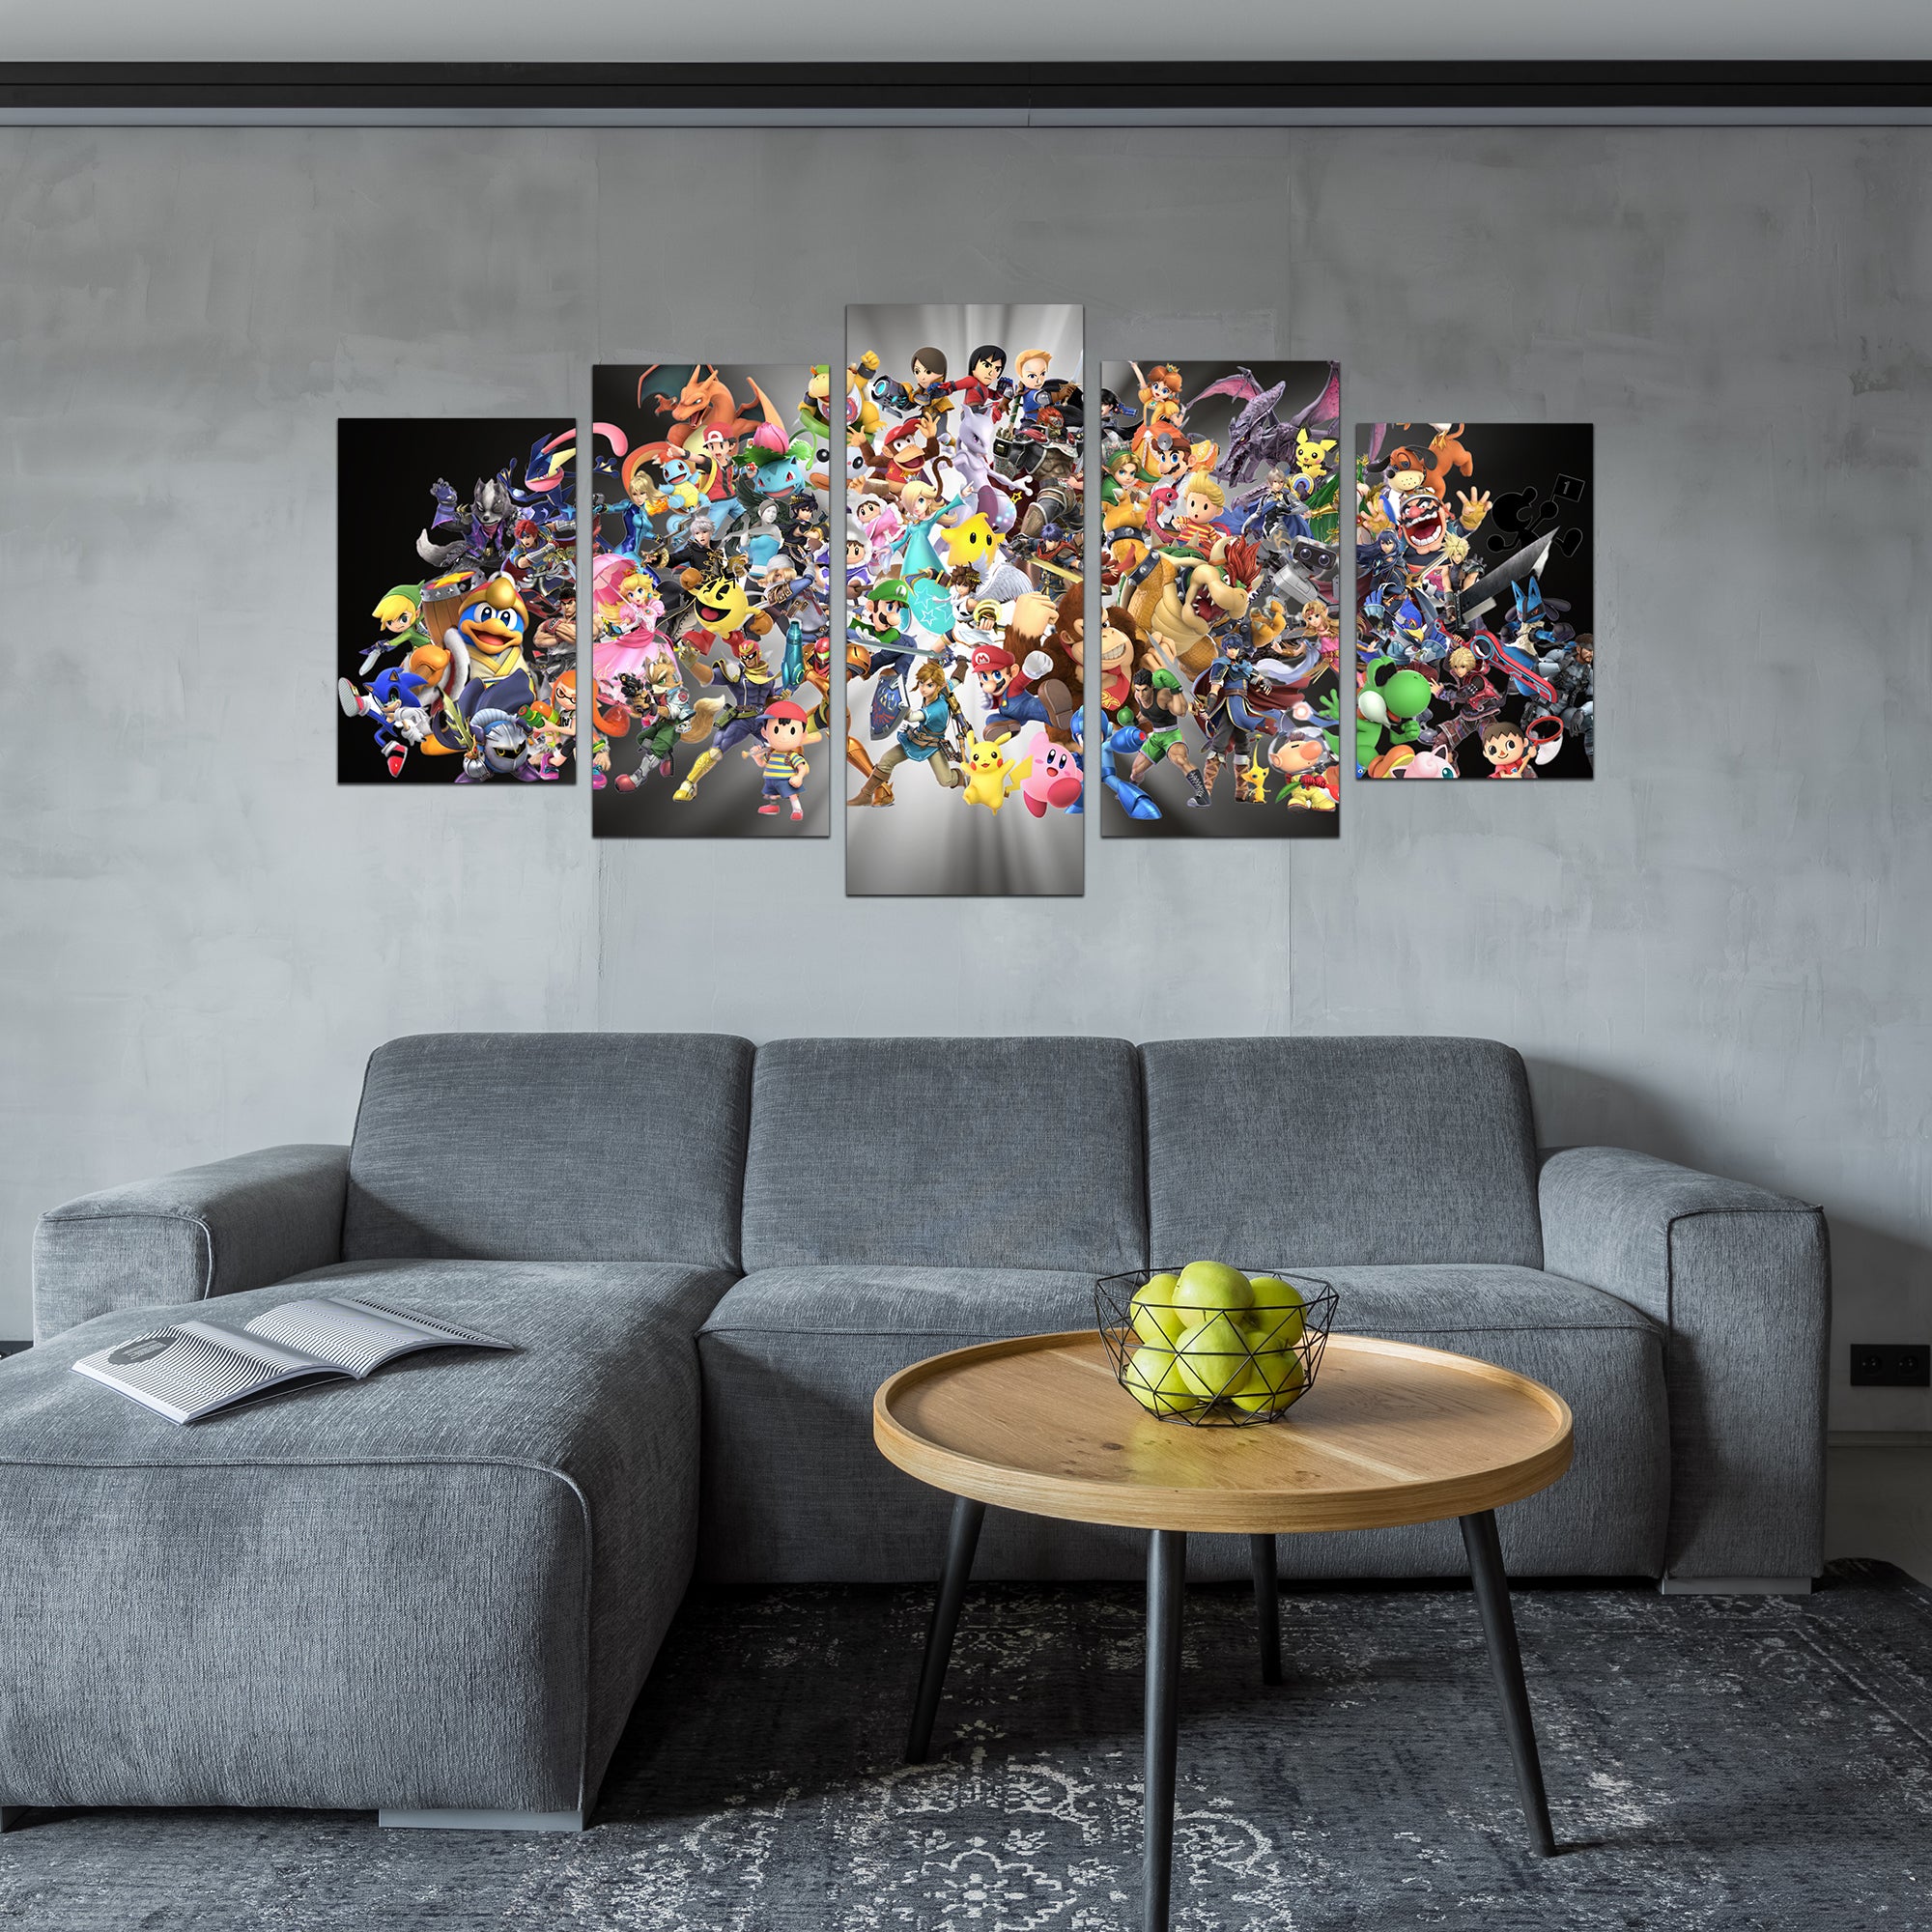 Super Smash Bros Wall Canvas Set - High-Quality Prints, Iconic Characters, Vivid Colors